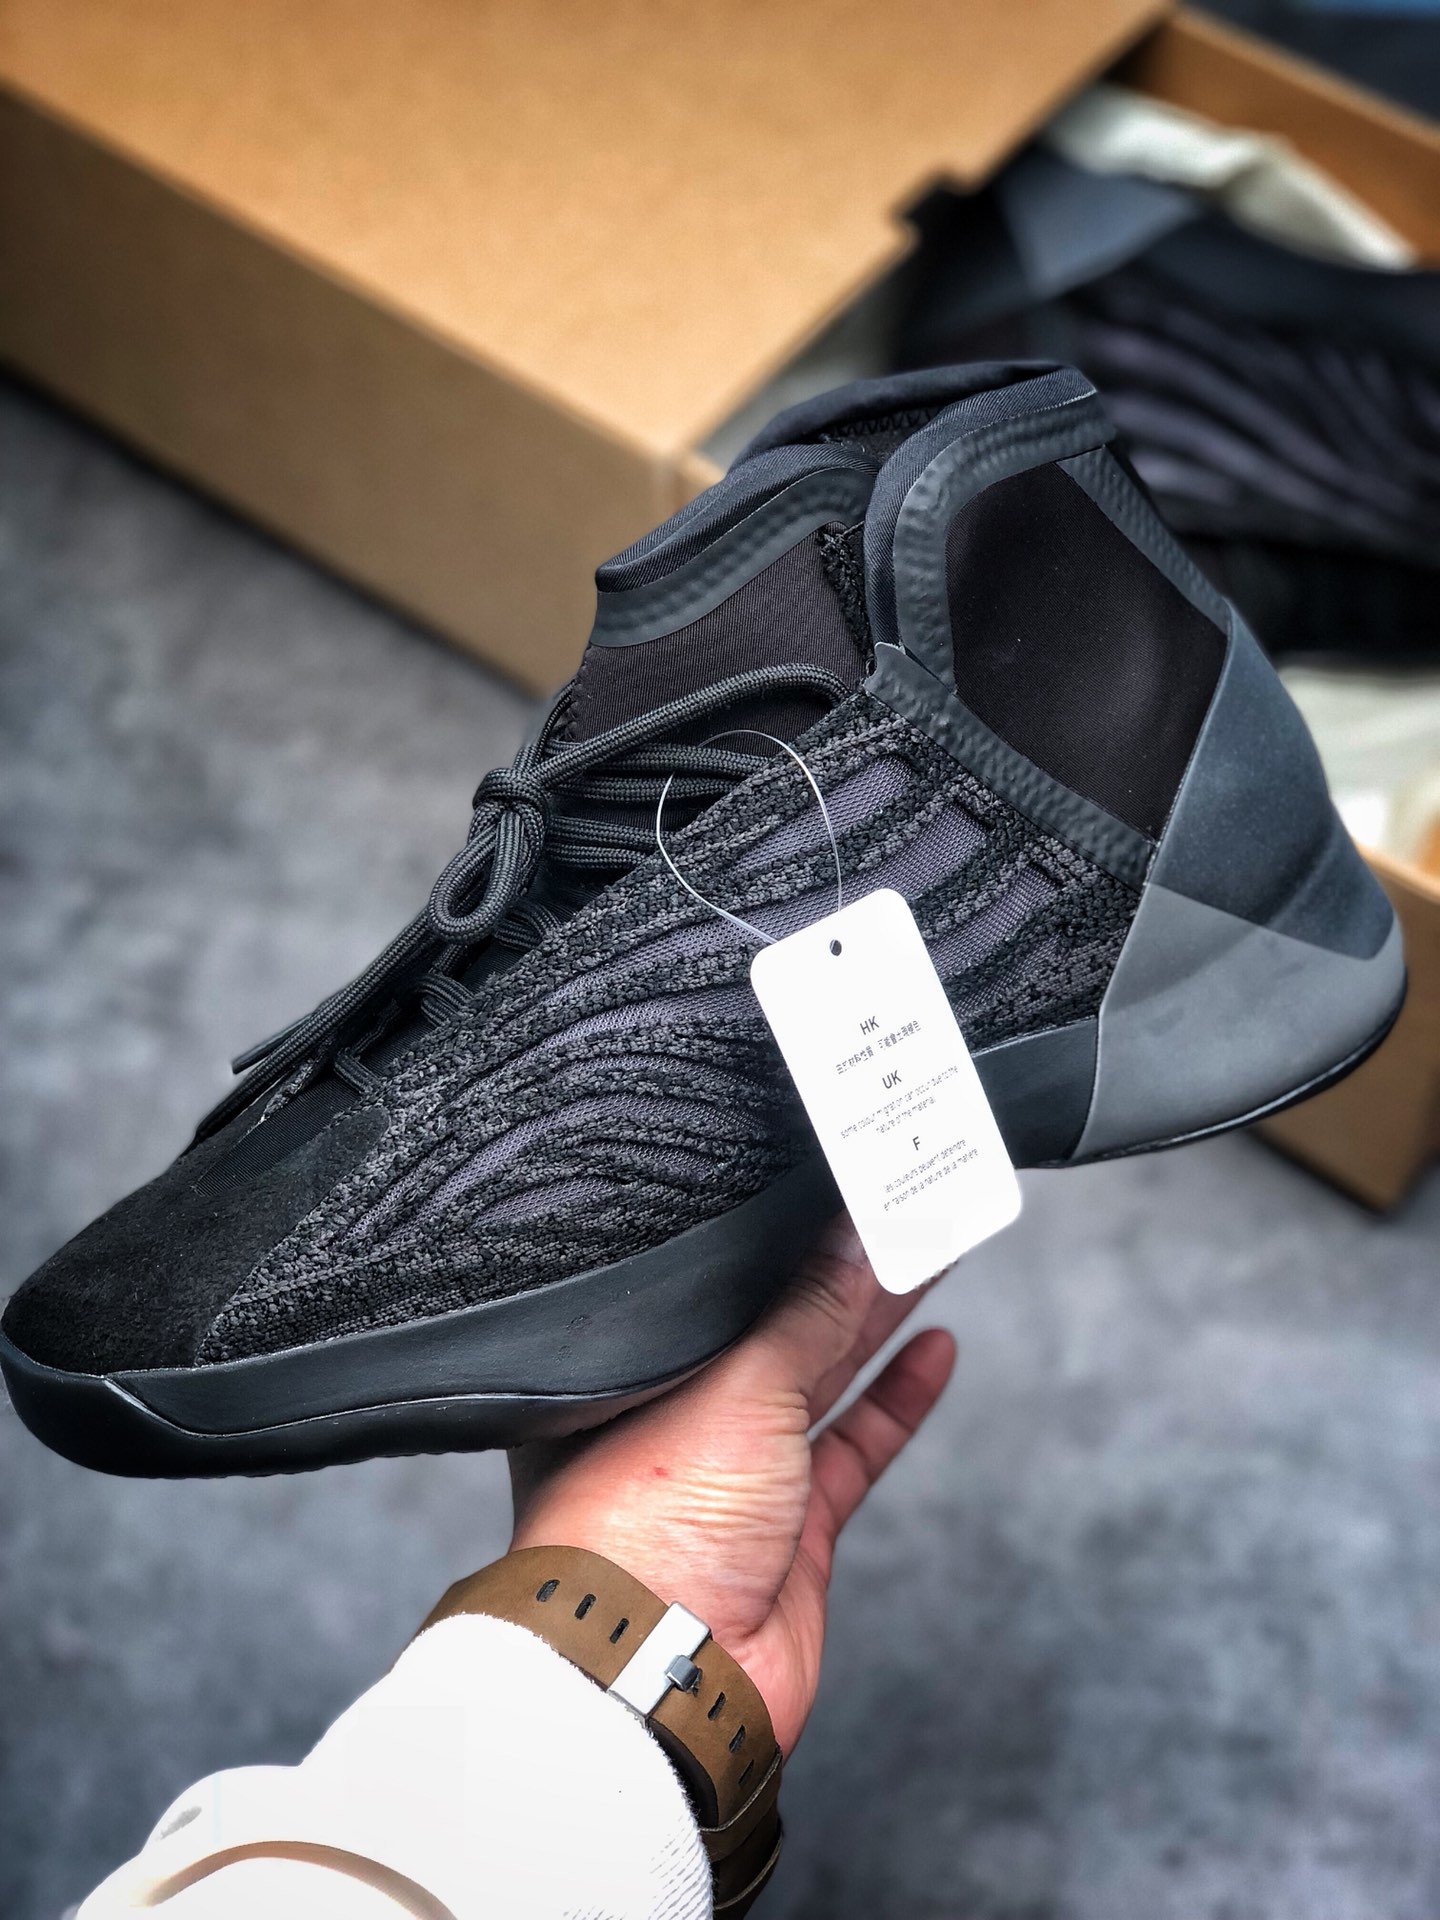 Cheap Adidas Yeezy Boost 350 V2 Zebra 2019 Size 105